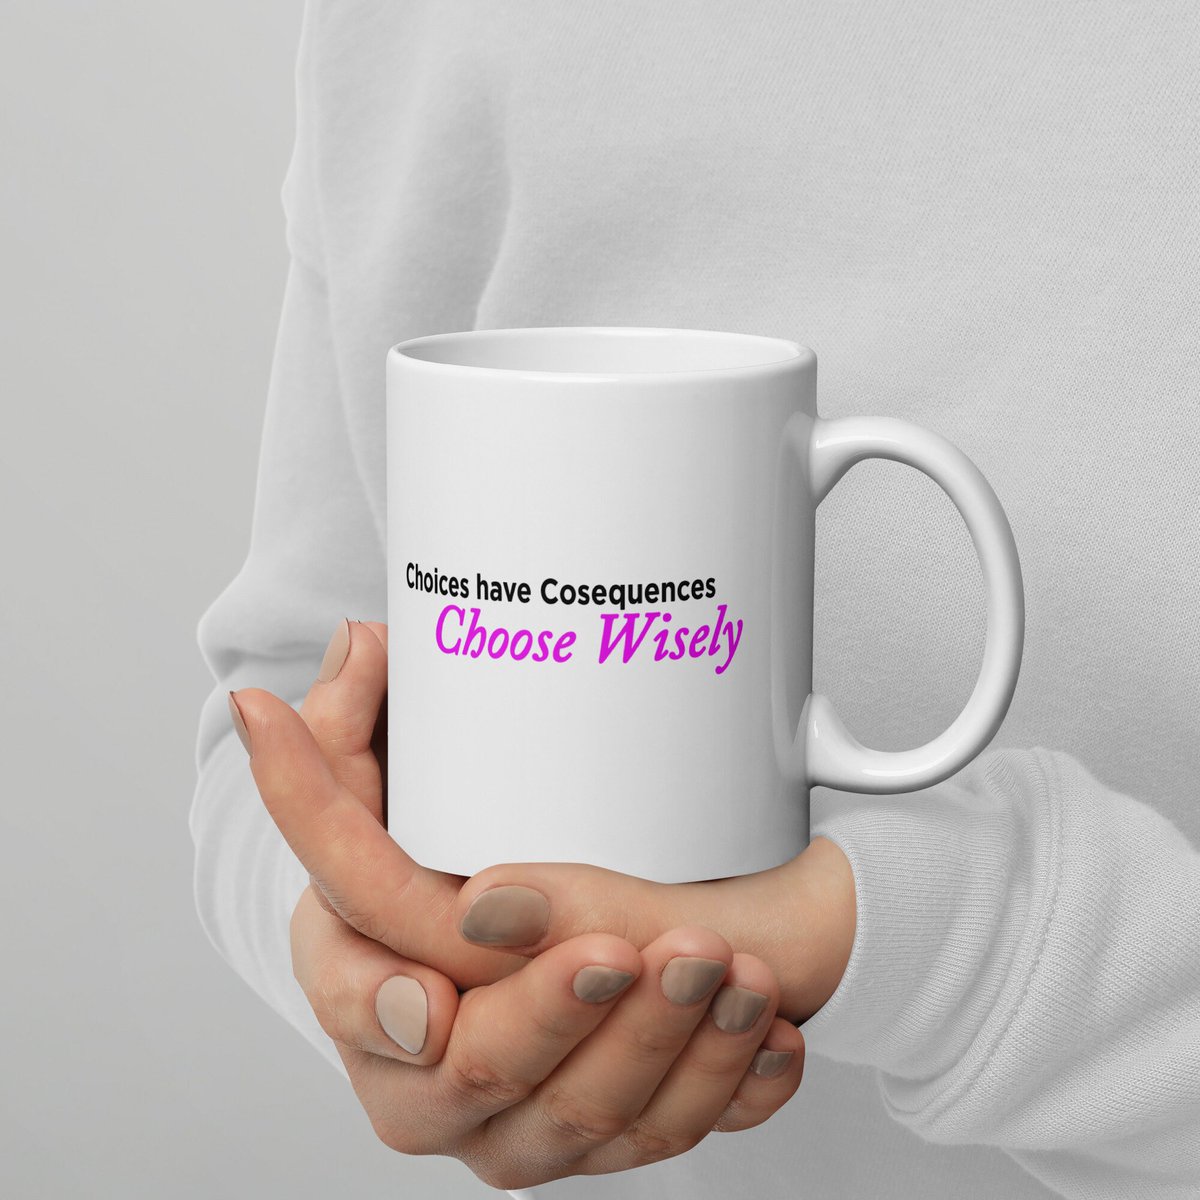 Excited to share the latest addition to our #etsy shop: Choices Have Consequences White glossy mug etsy.me/3xPLcKM #white #yes #ceramic #choicescoffeemug #choosewhitemug #whitecoffeemug #inspirationalmug #spiritualmug #religiousmug